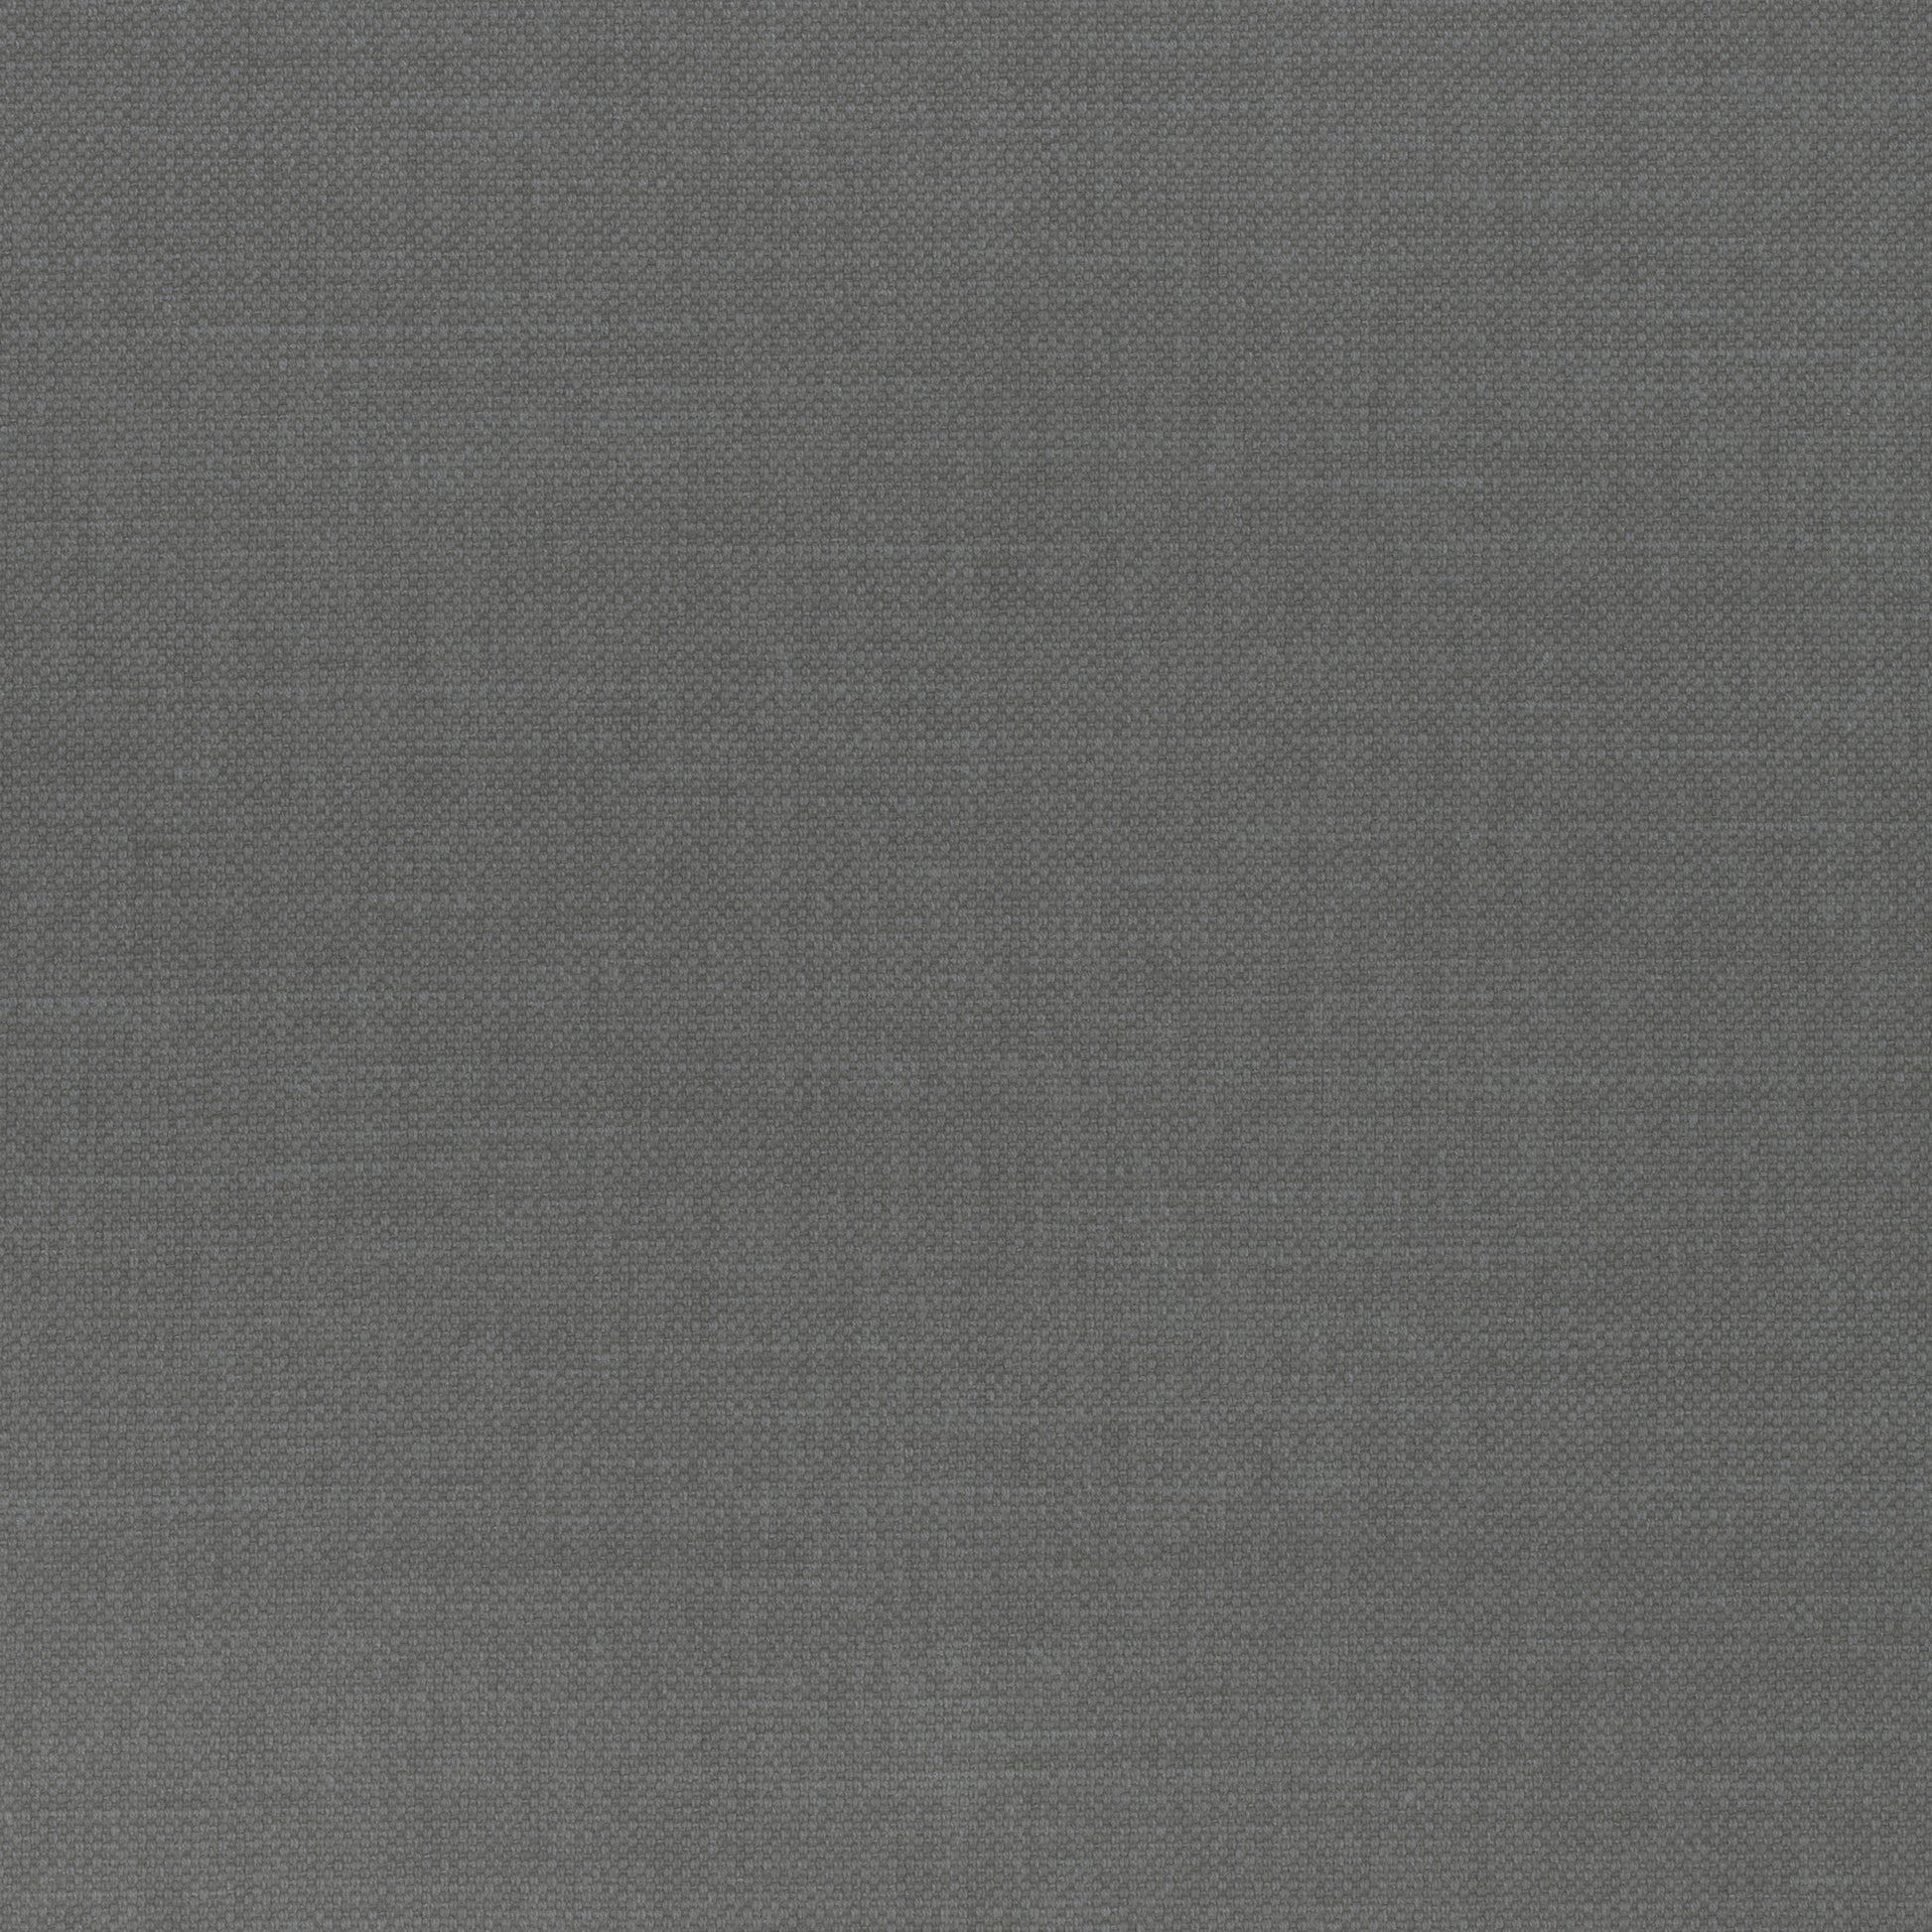 Purchase Thibaut Fabric Item W70113 pattern name Prisma color Black